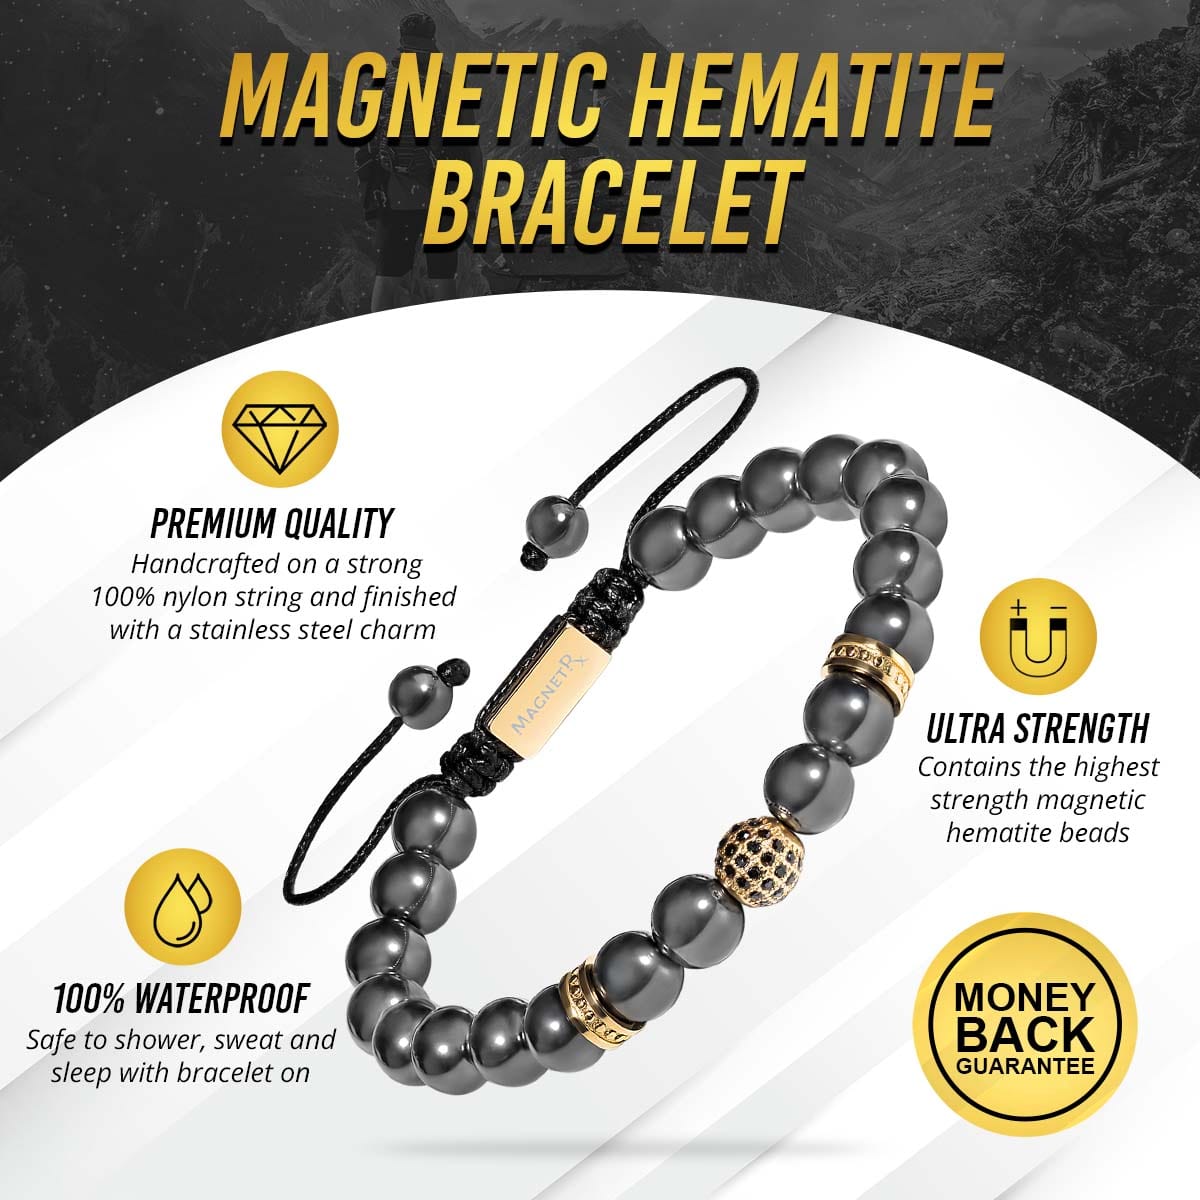 High Power Magnetic Hematite Bracelet Gold Zeus